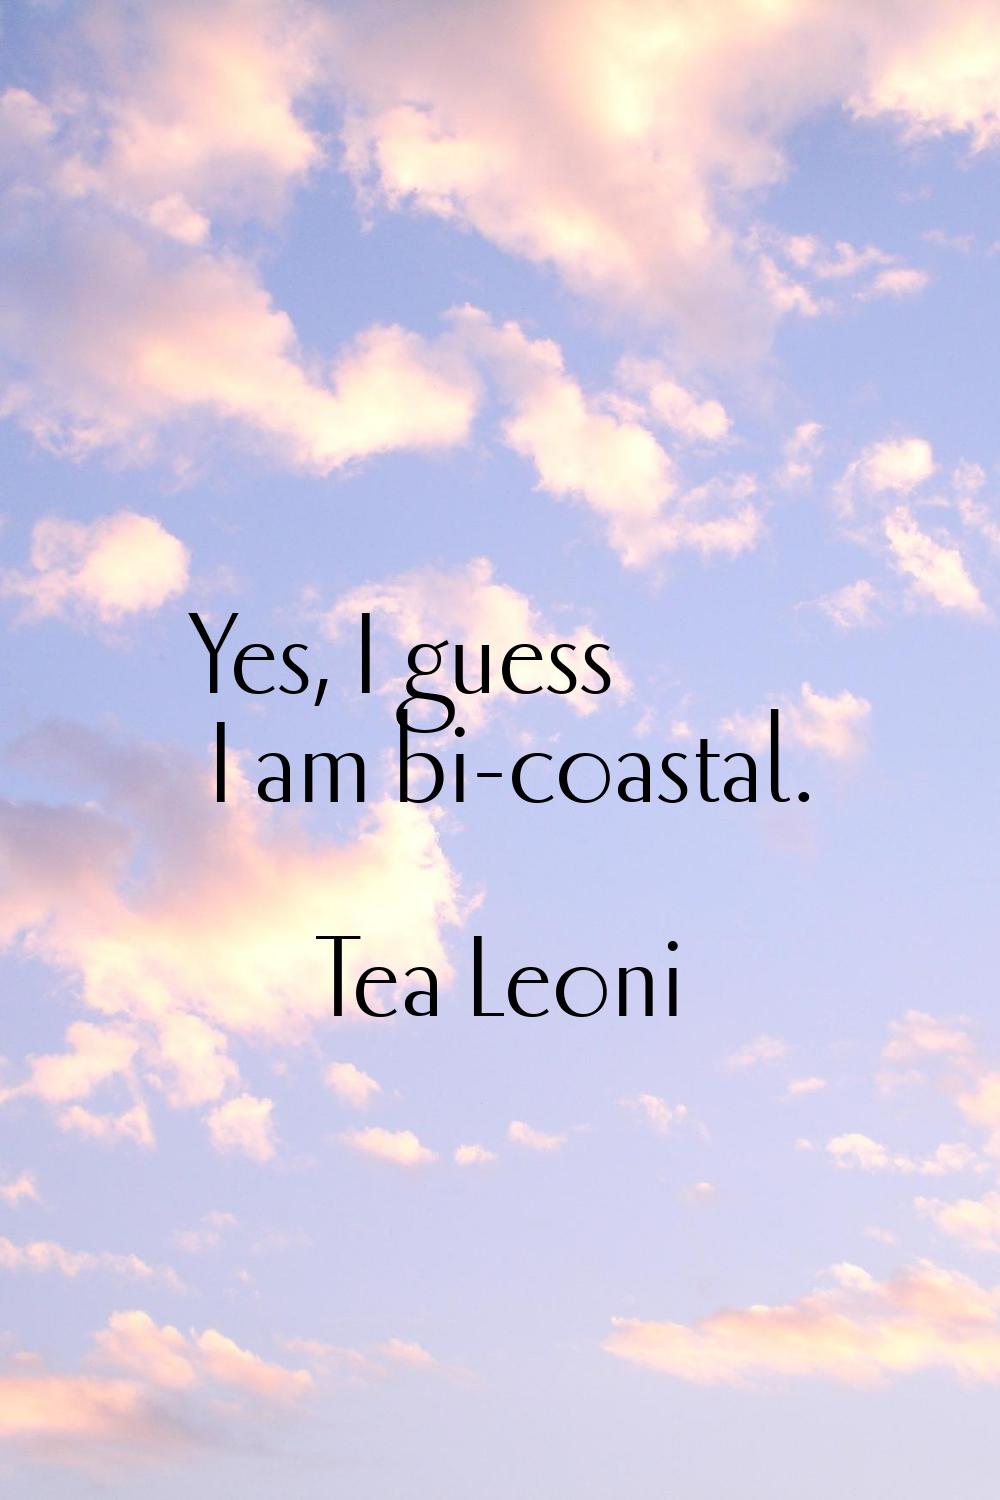 Yes, I guess I am bi-coastal.